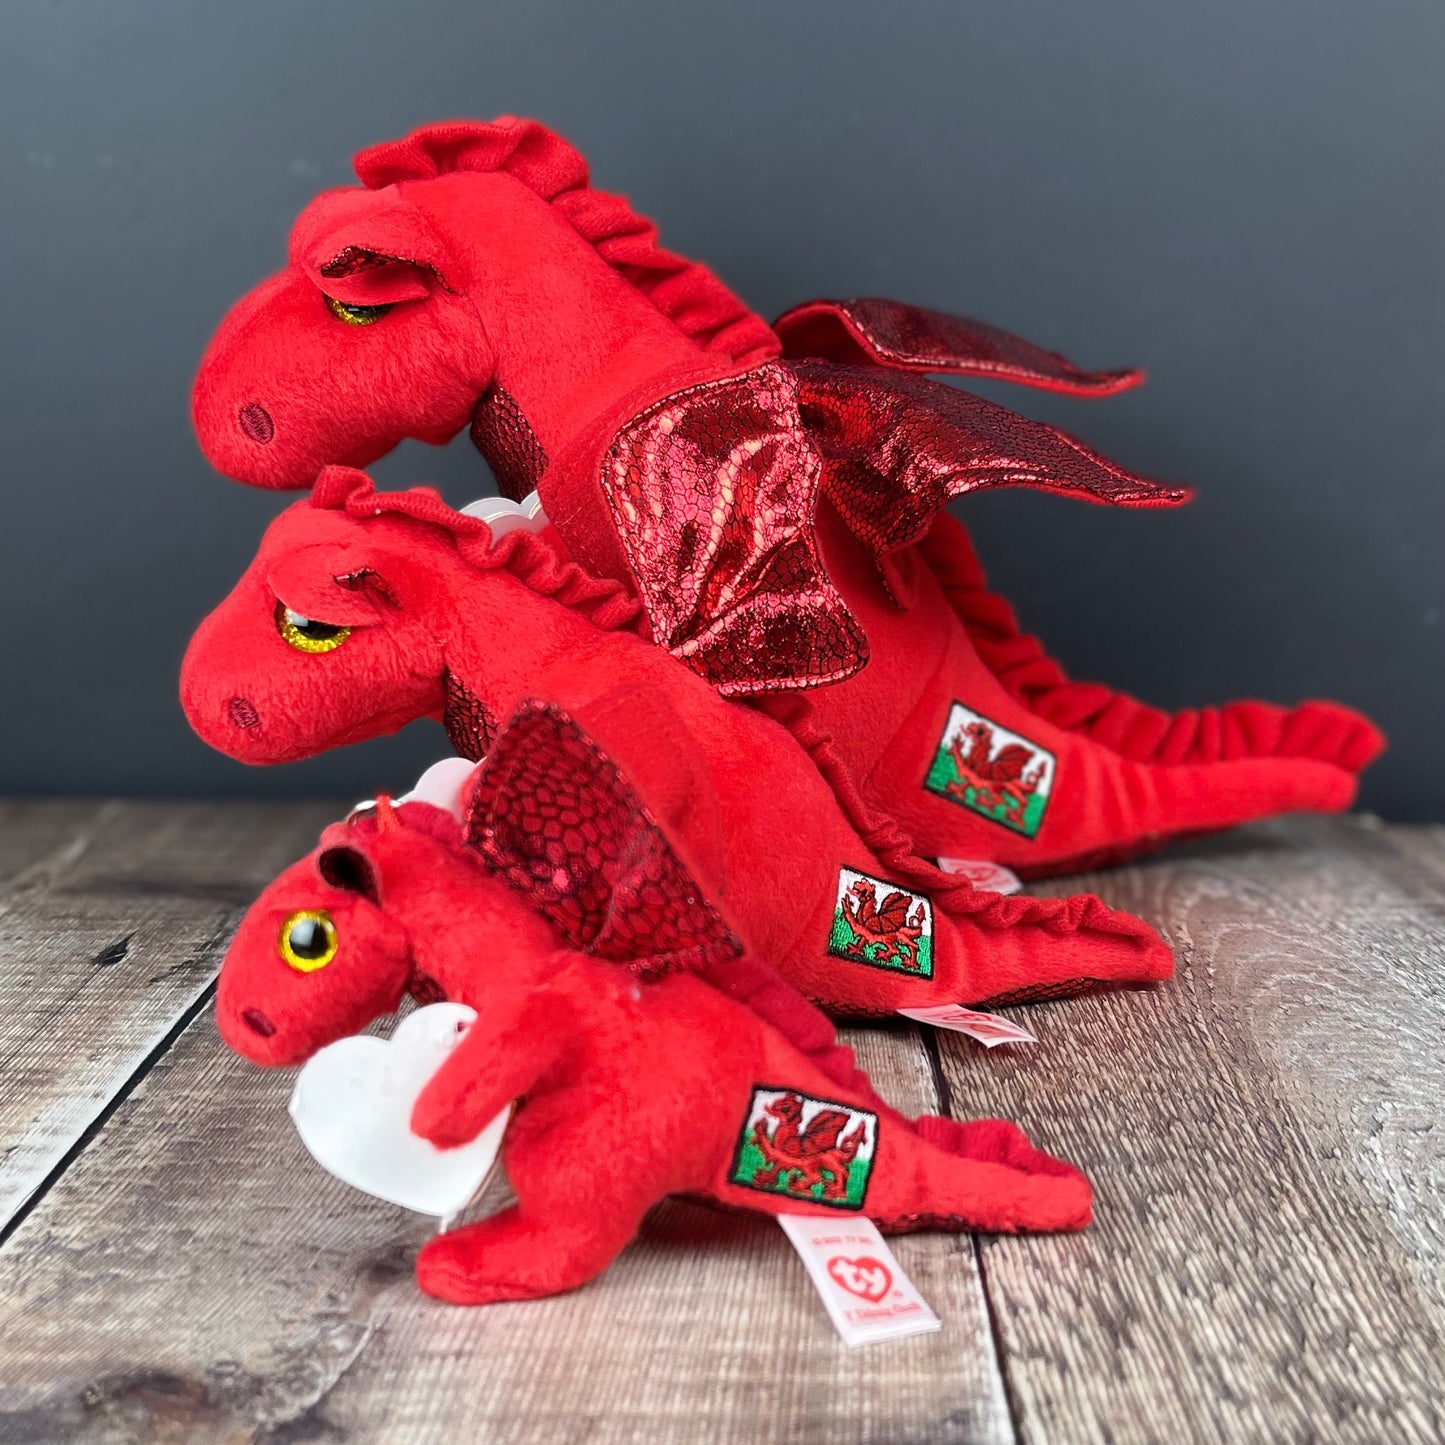 Regular Welsh Dragon by TY